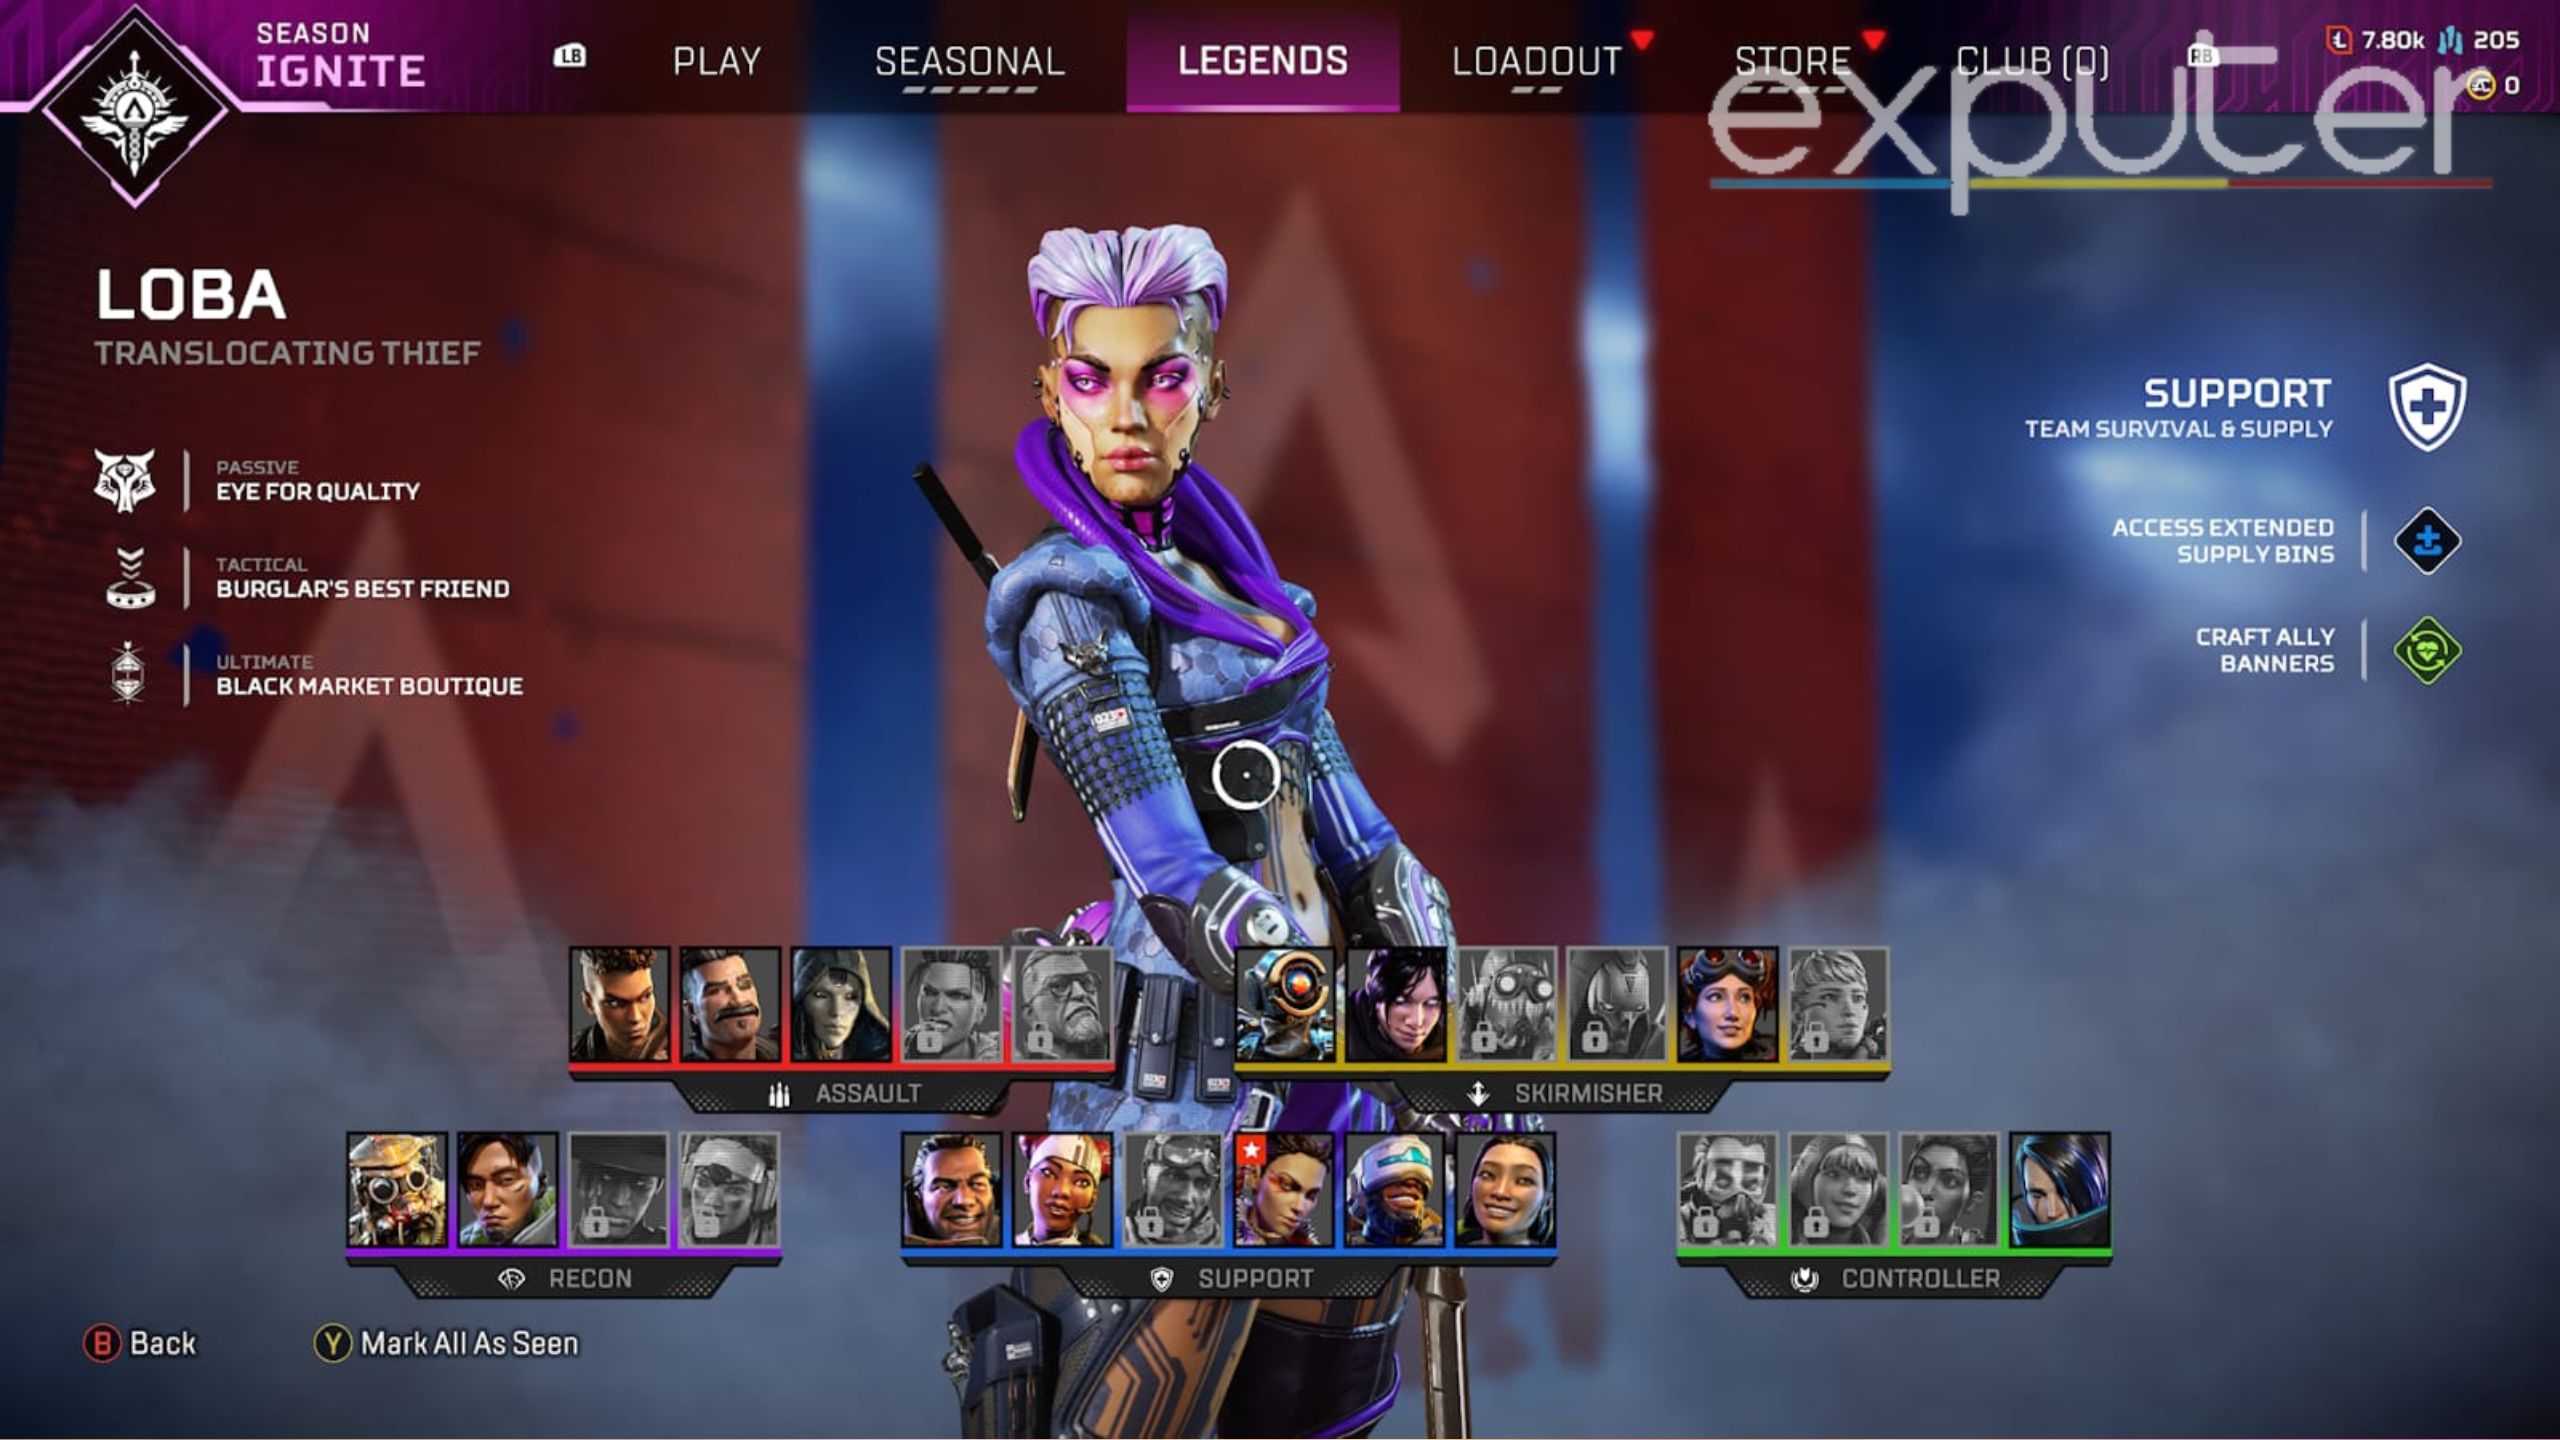 Legends' roster. (Image taken by eXputer)